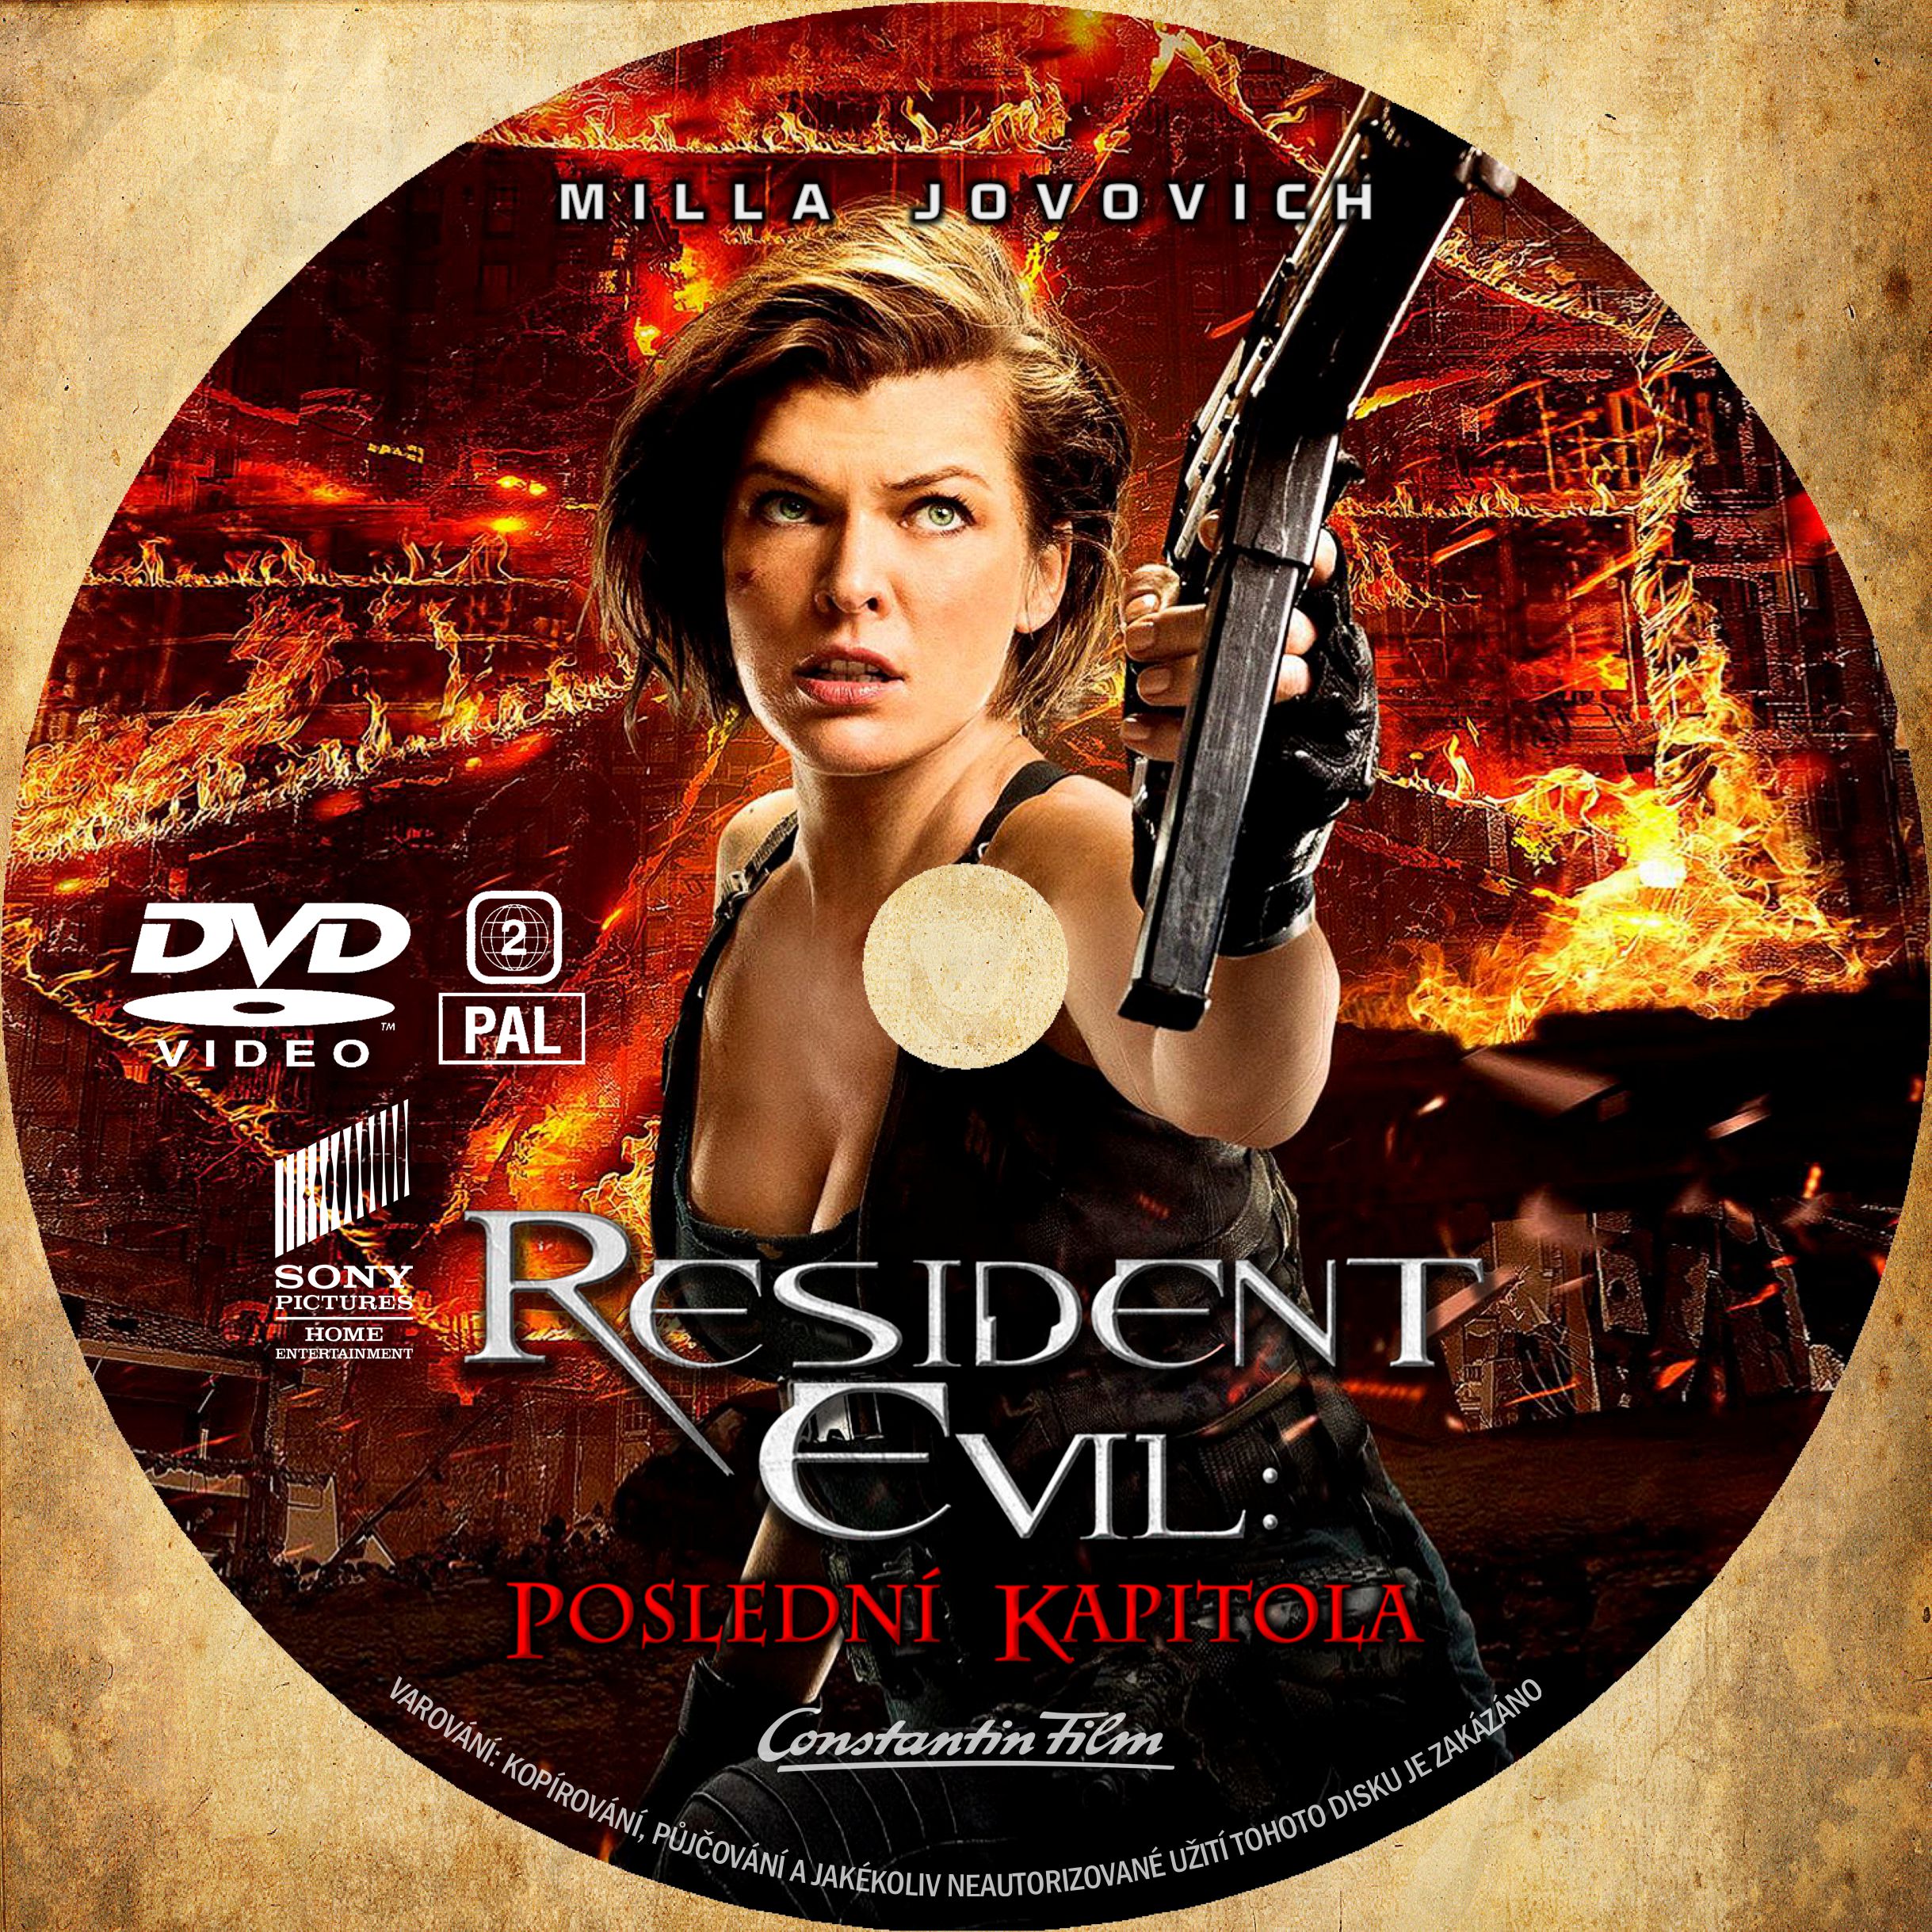 The Resident Evil: Final Chapter (DVD)